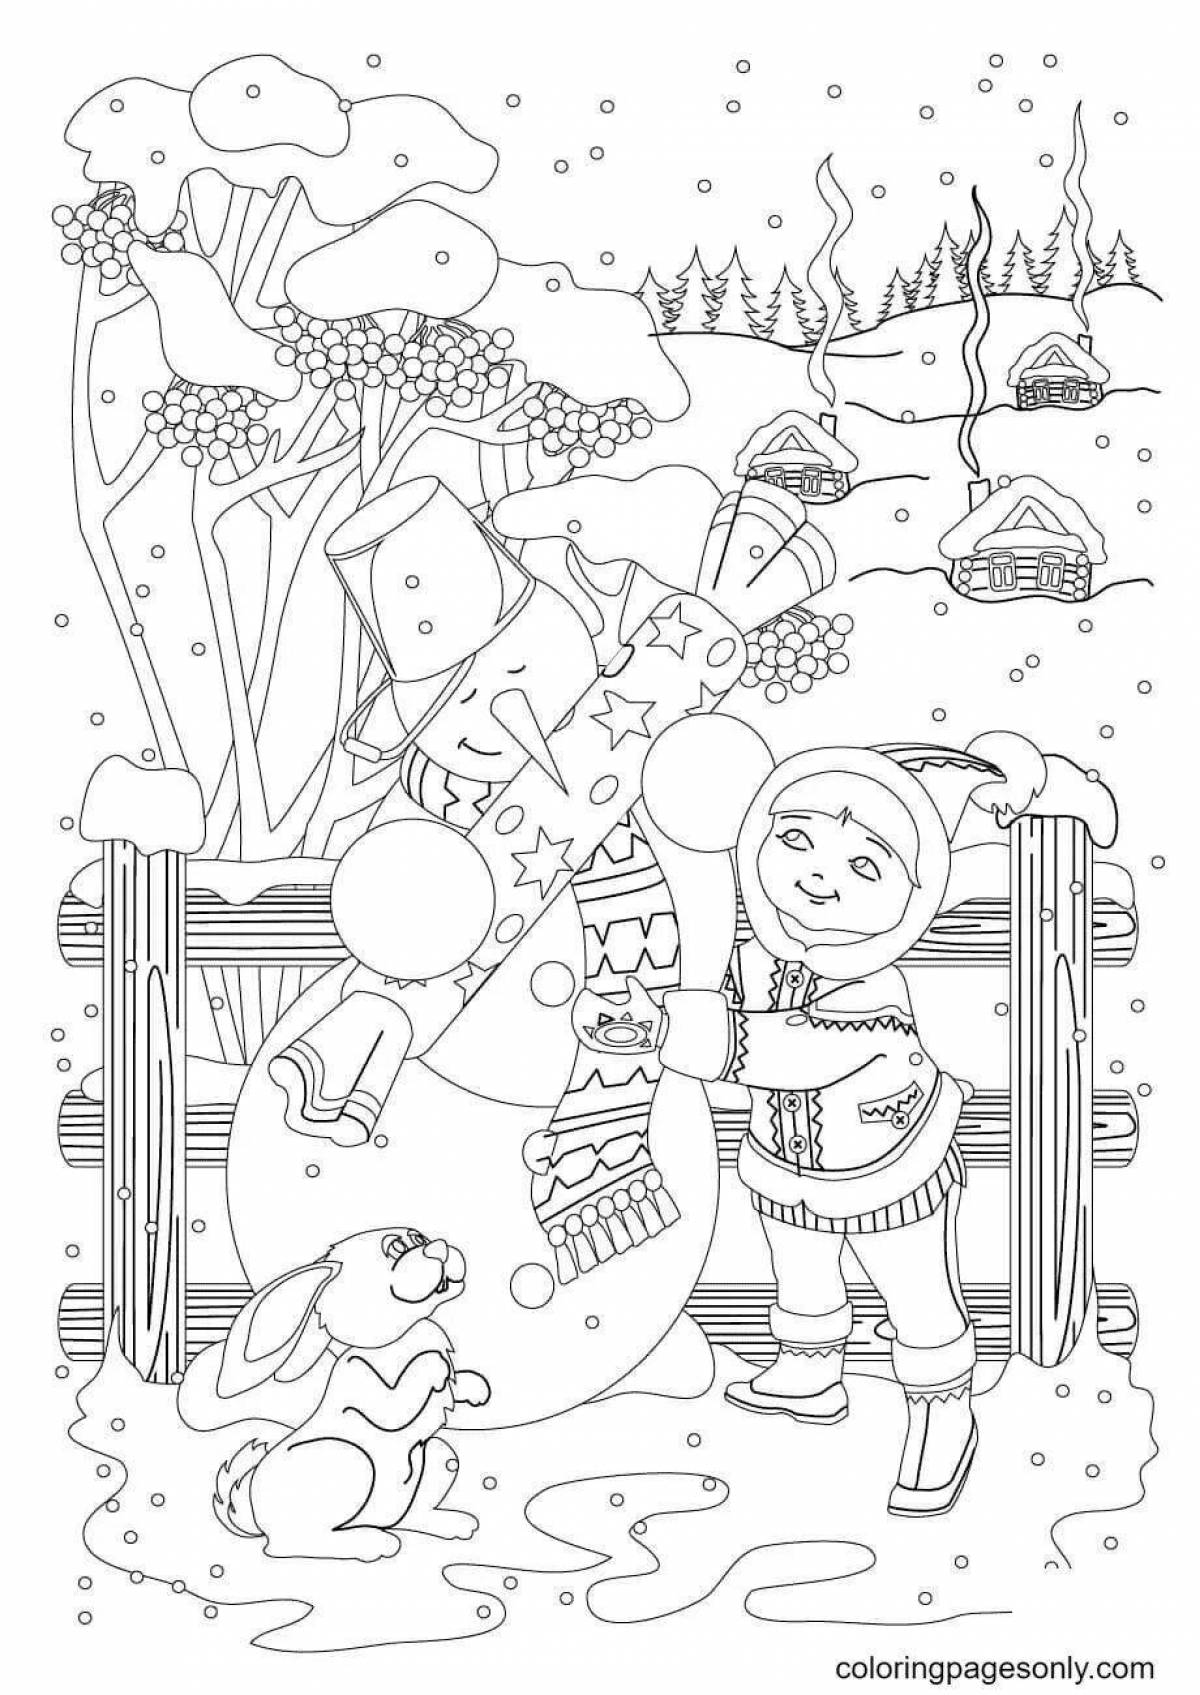 Shiny snowman antistress coloring book